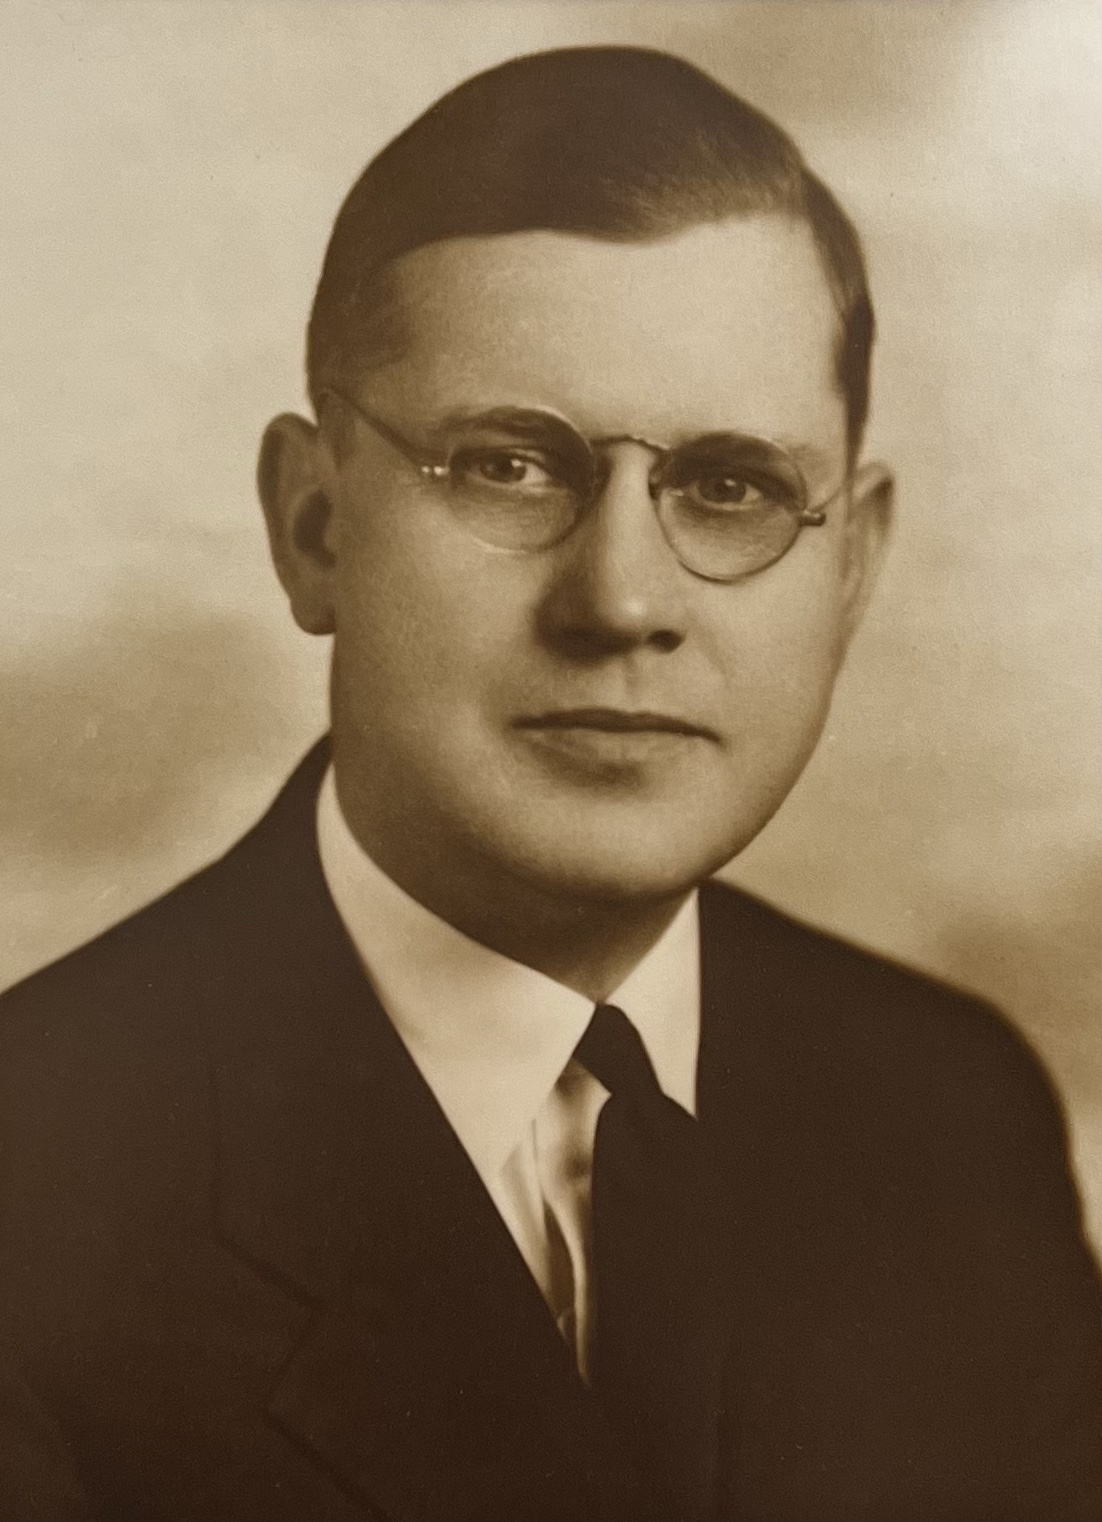 The Rev. Ralph W. Lind